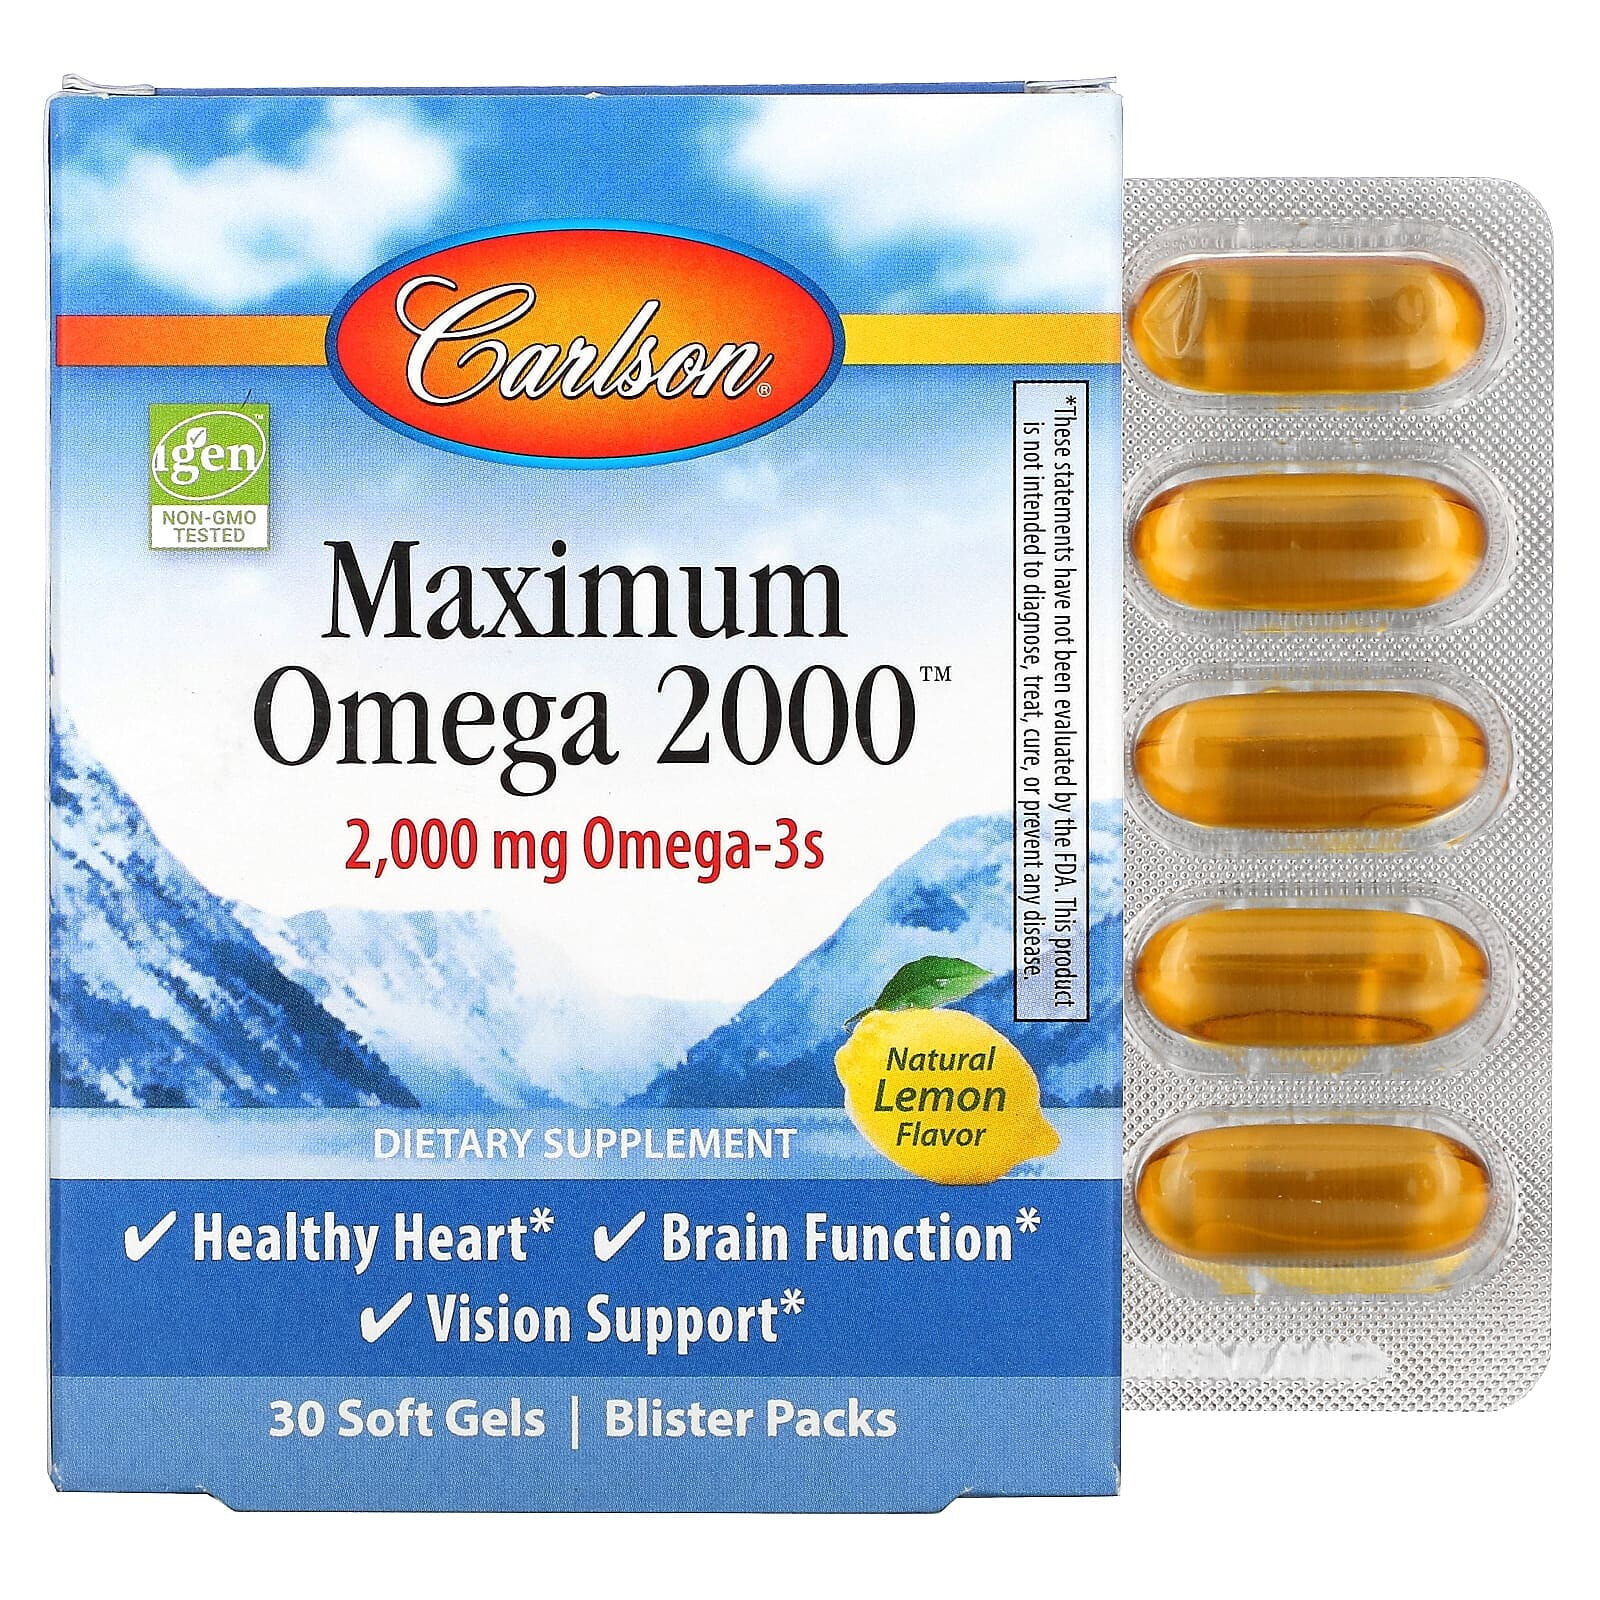 Maximum Omega 2000, Natural Lemon, 2,000 mg, 30 Soft Gels (1,000 mg per Soft Gel)